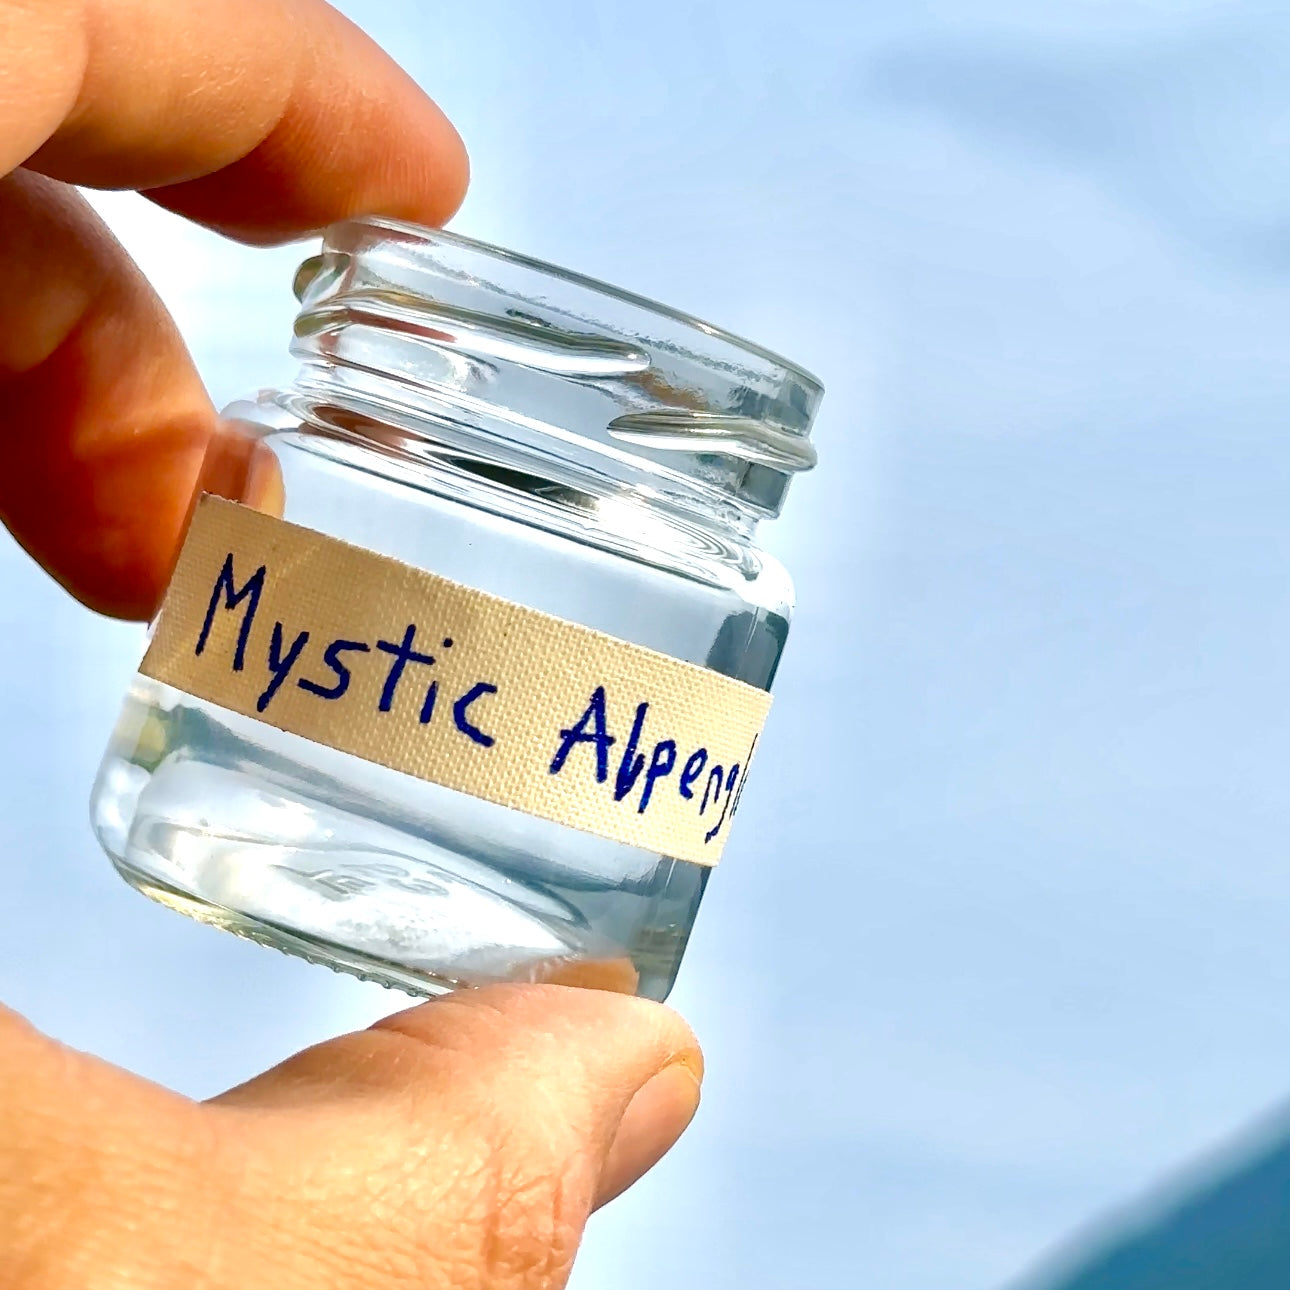 Mystic Alpenglow - The Satirical Air